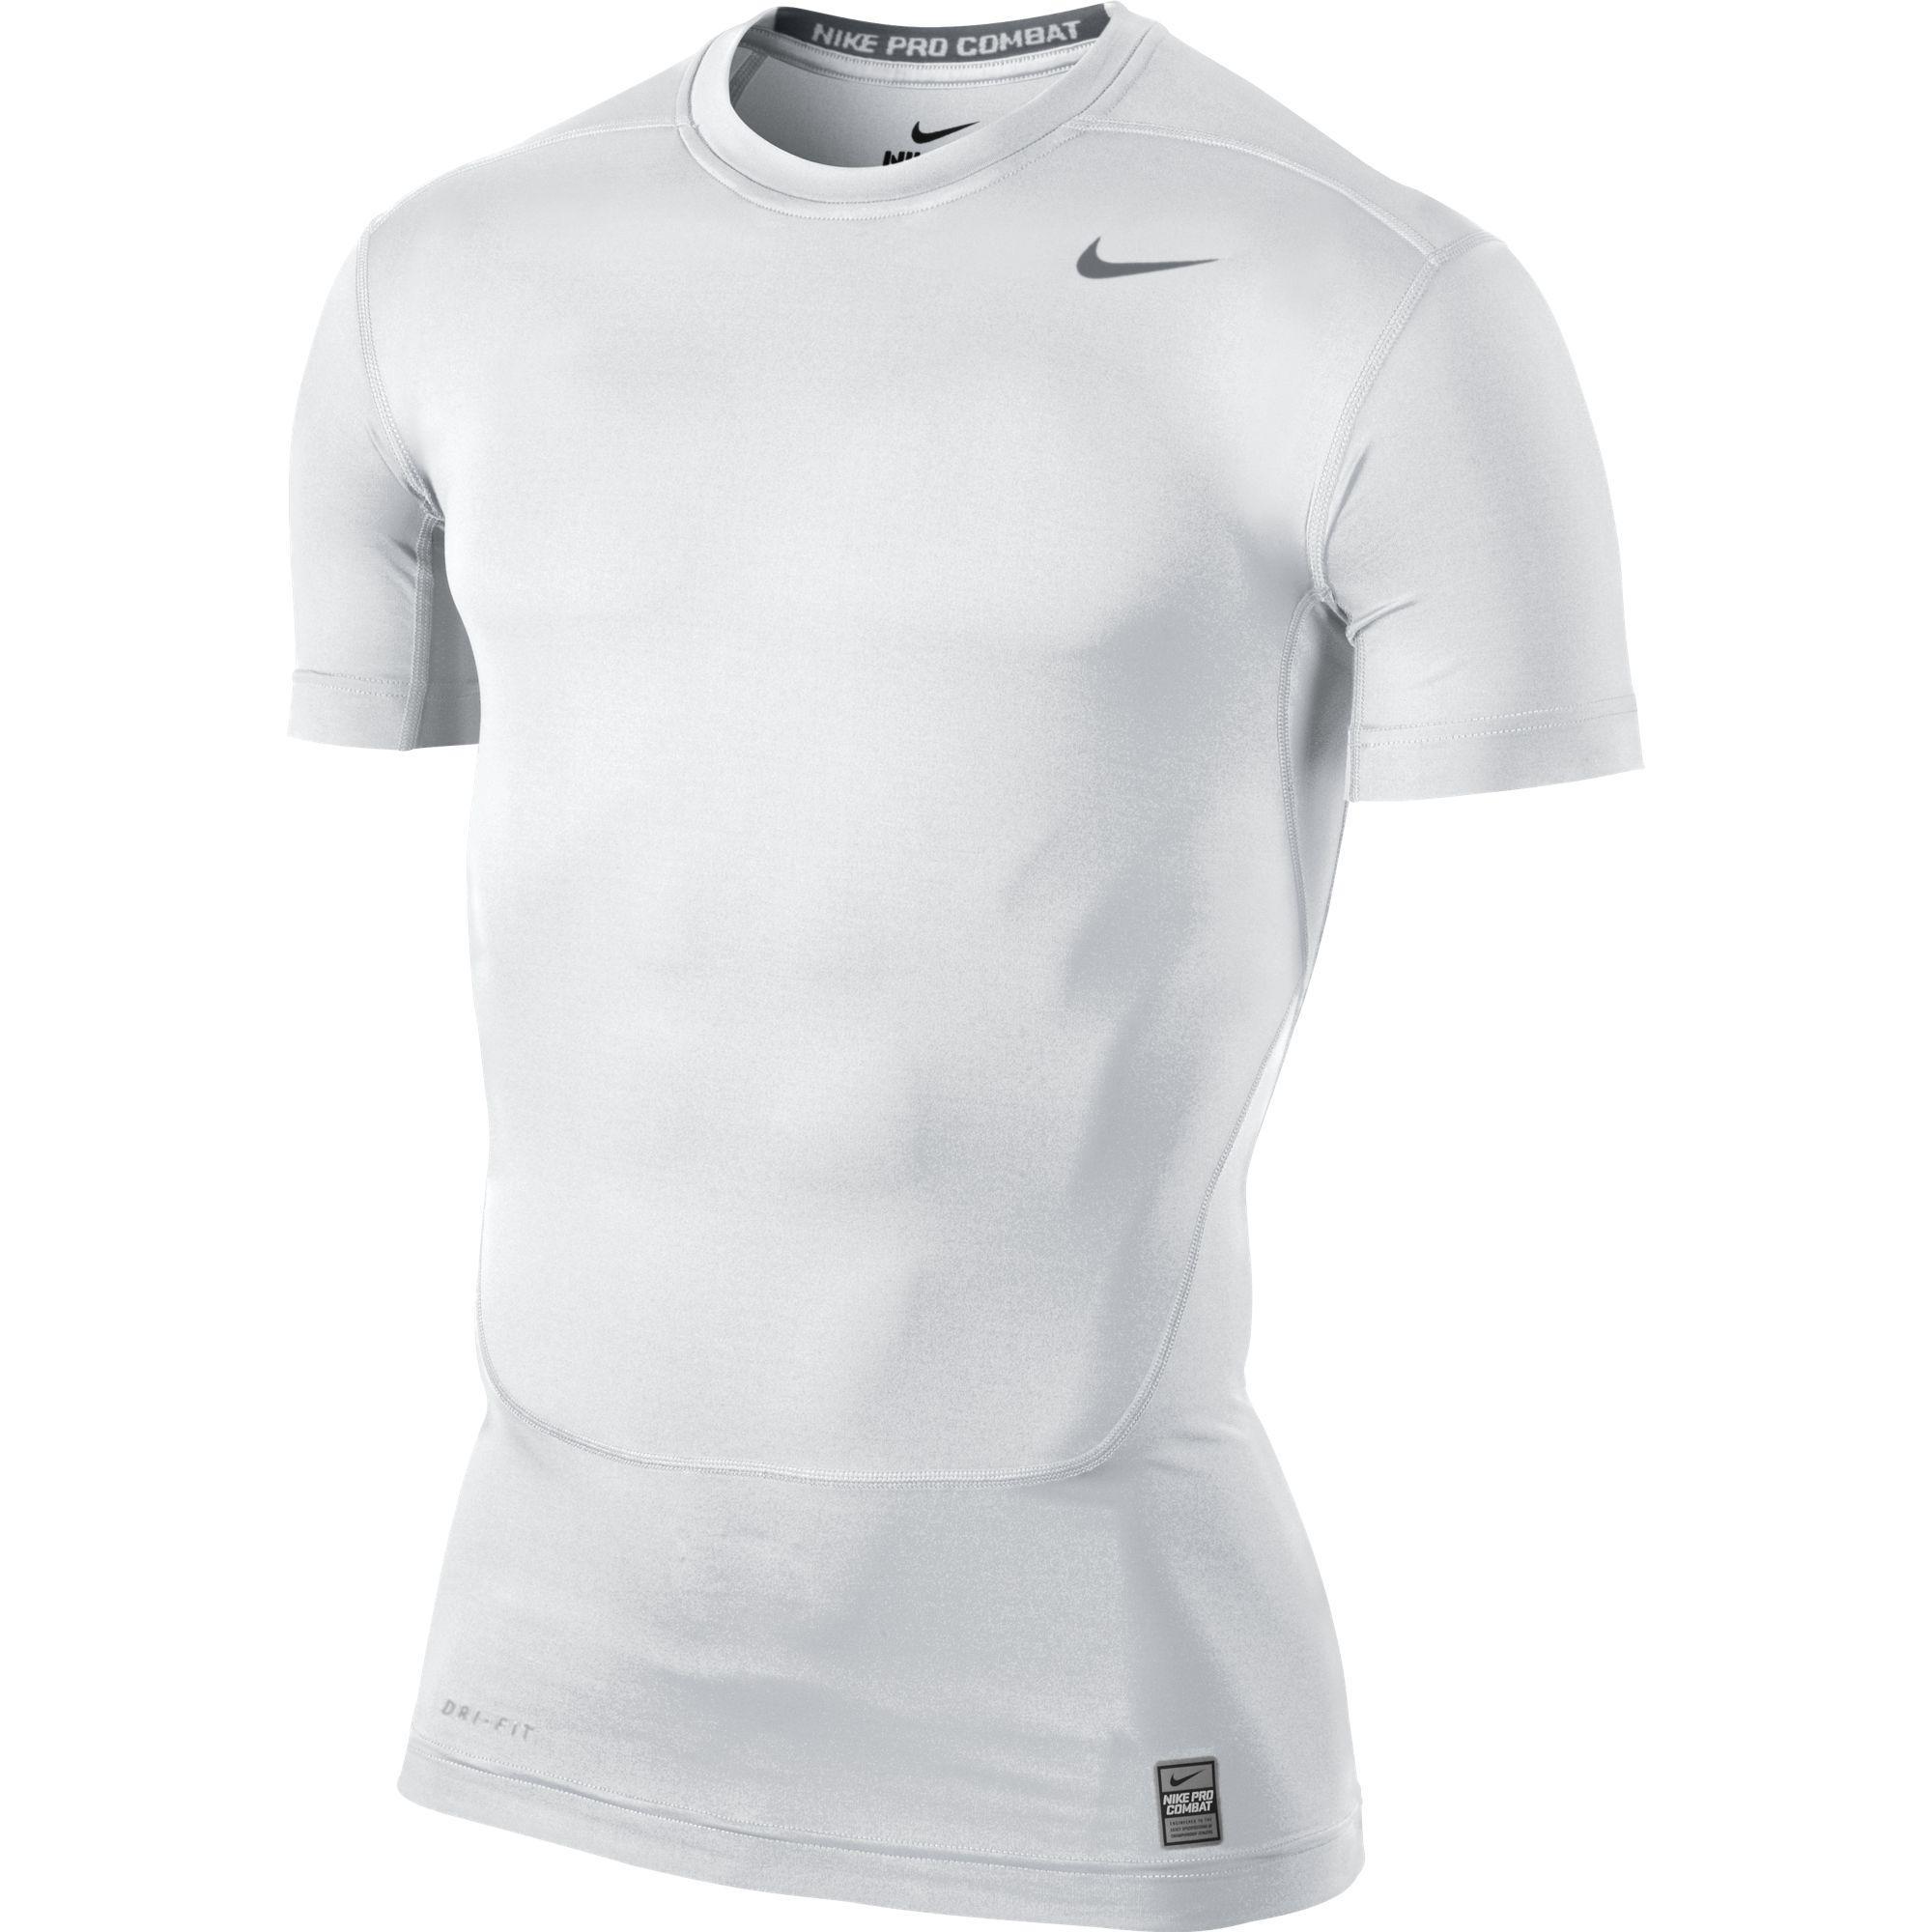 Nike Pro 2.0 Combat Core Short Sleeve 